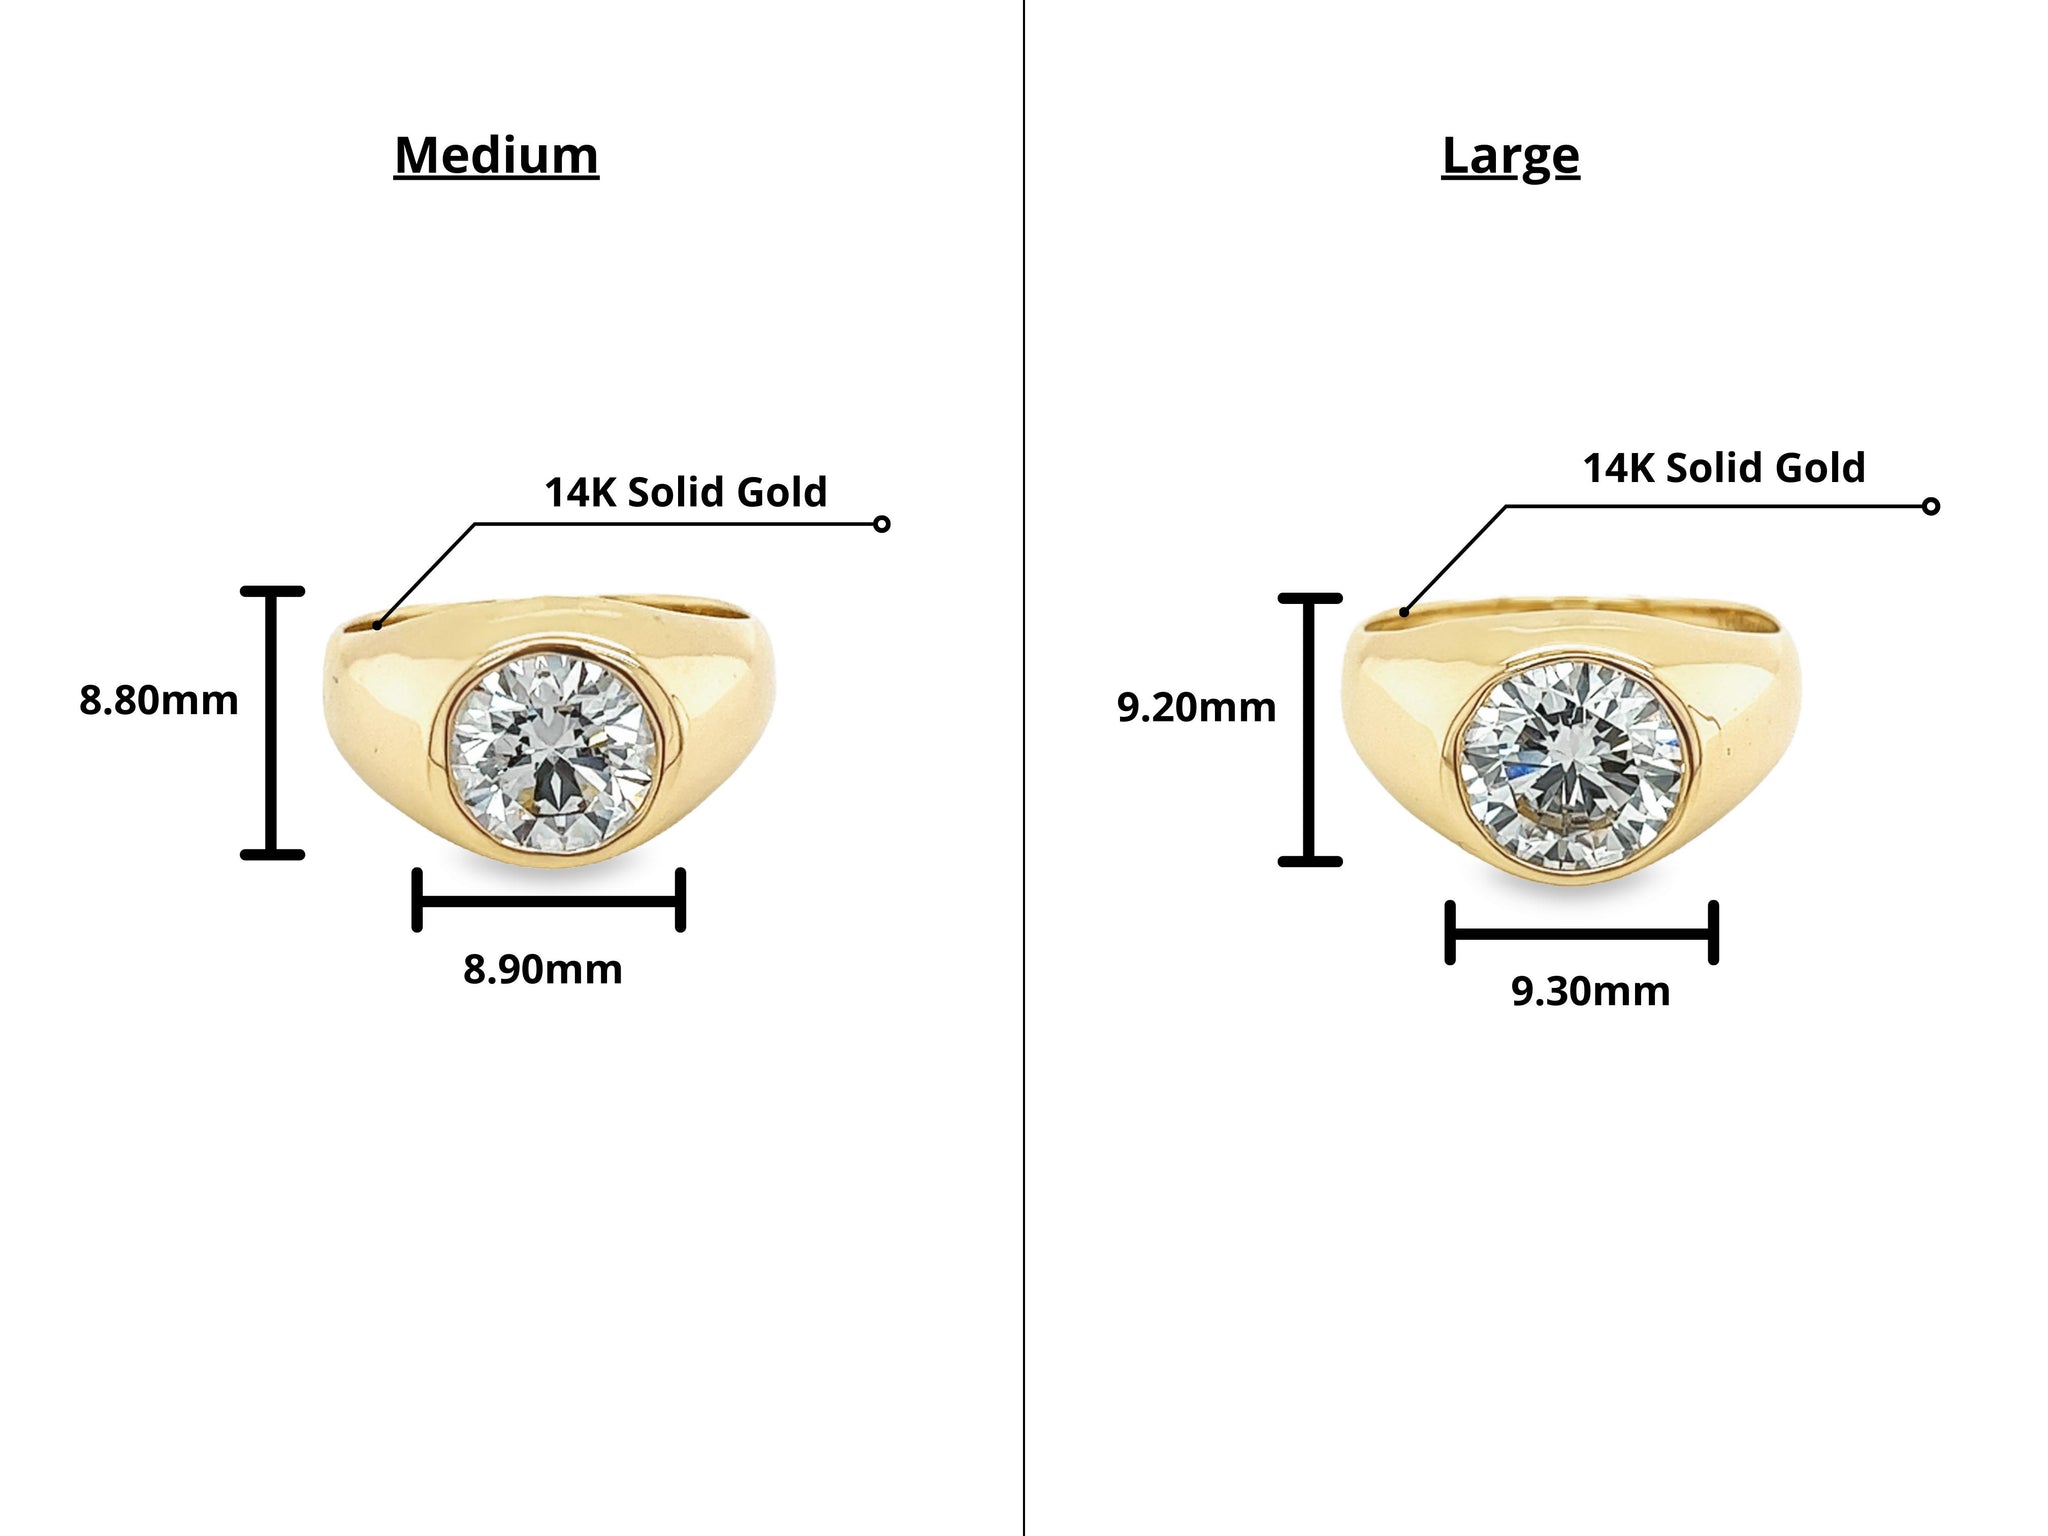 Baldwin Men's .75 Carat Cubic Zirconia Round Bezel Set Halo Lapel Pin | Ziamond Lab Grown Diamond Simulants